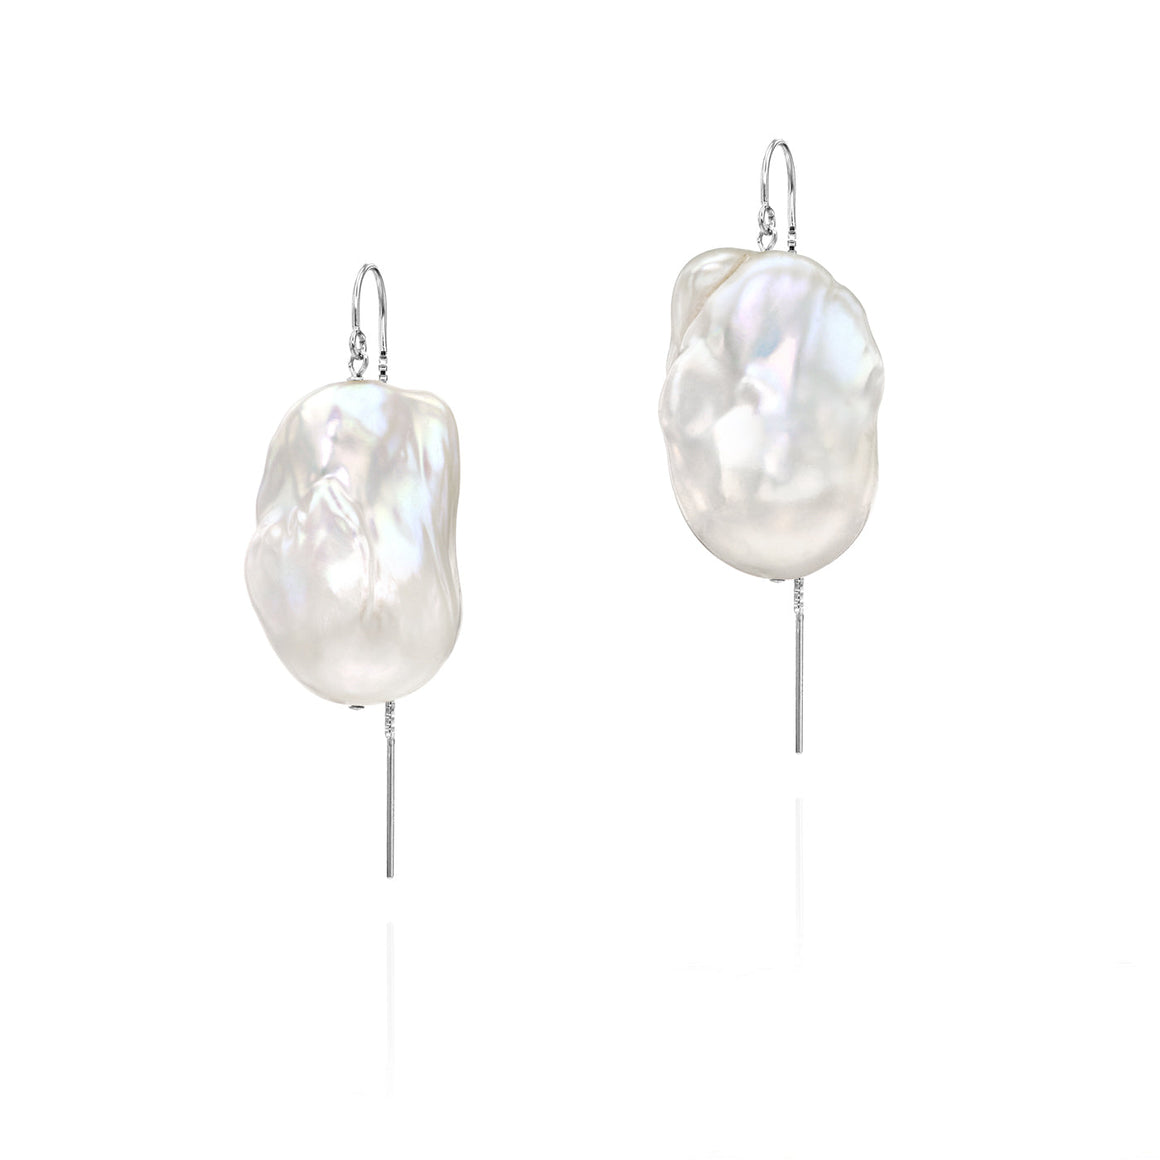 XXL Runway Size 14K White Gold Baroque Freshwater Pearl Drop Threader Earrings